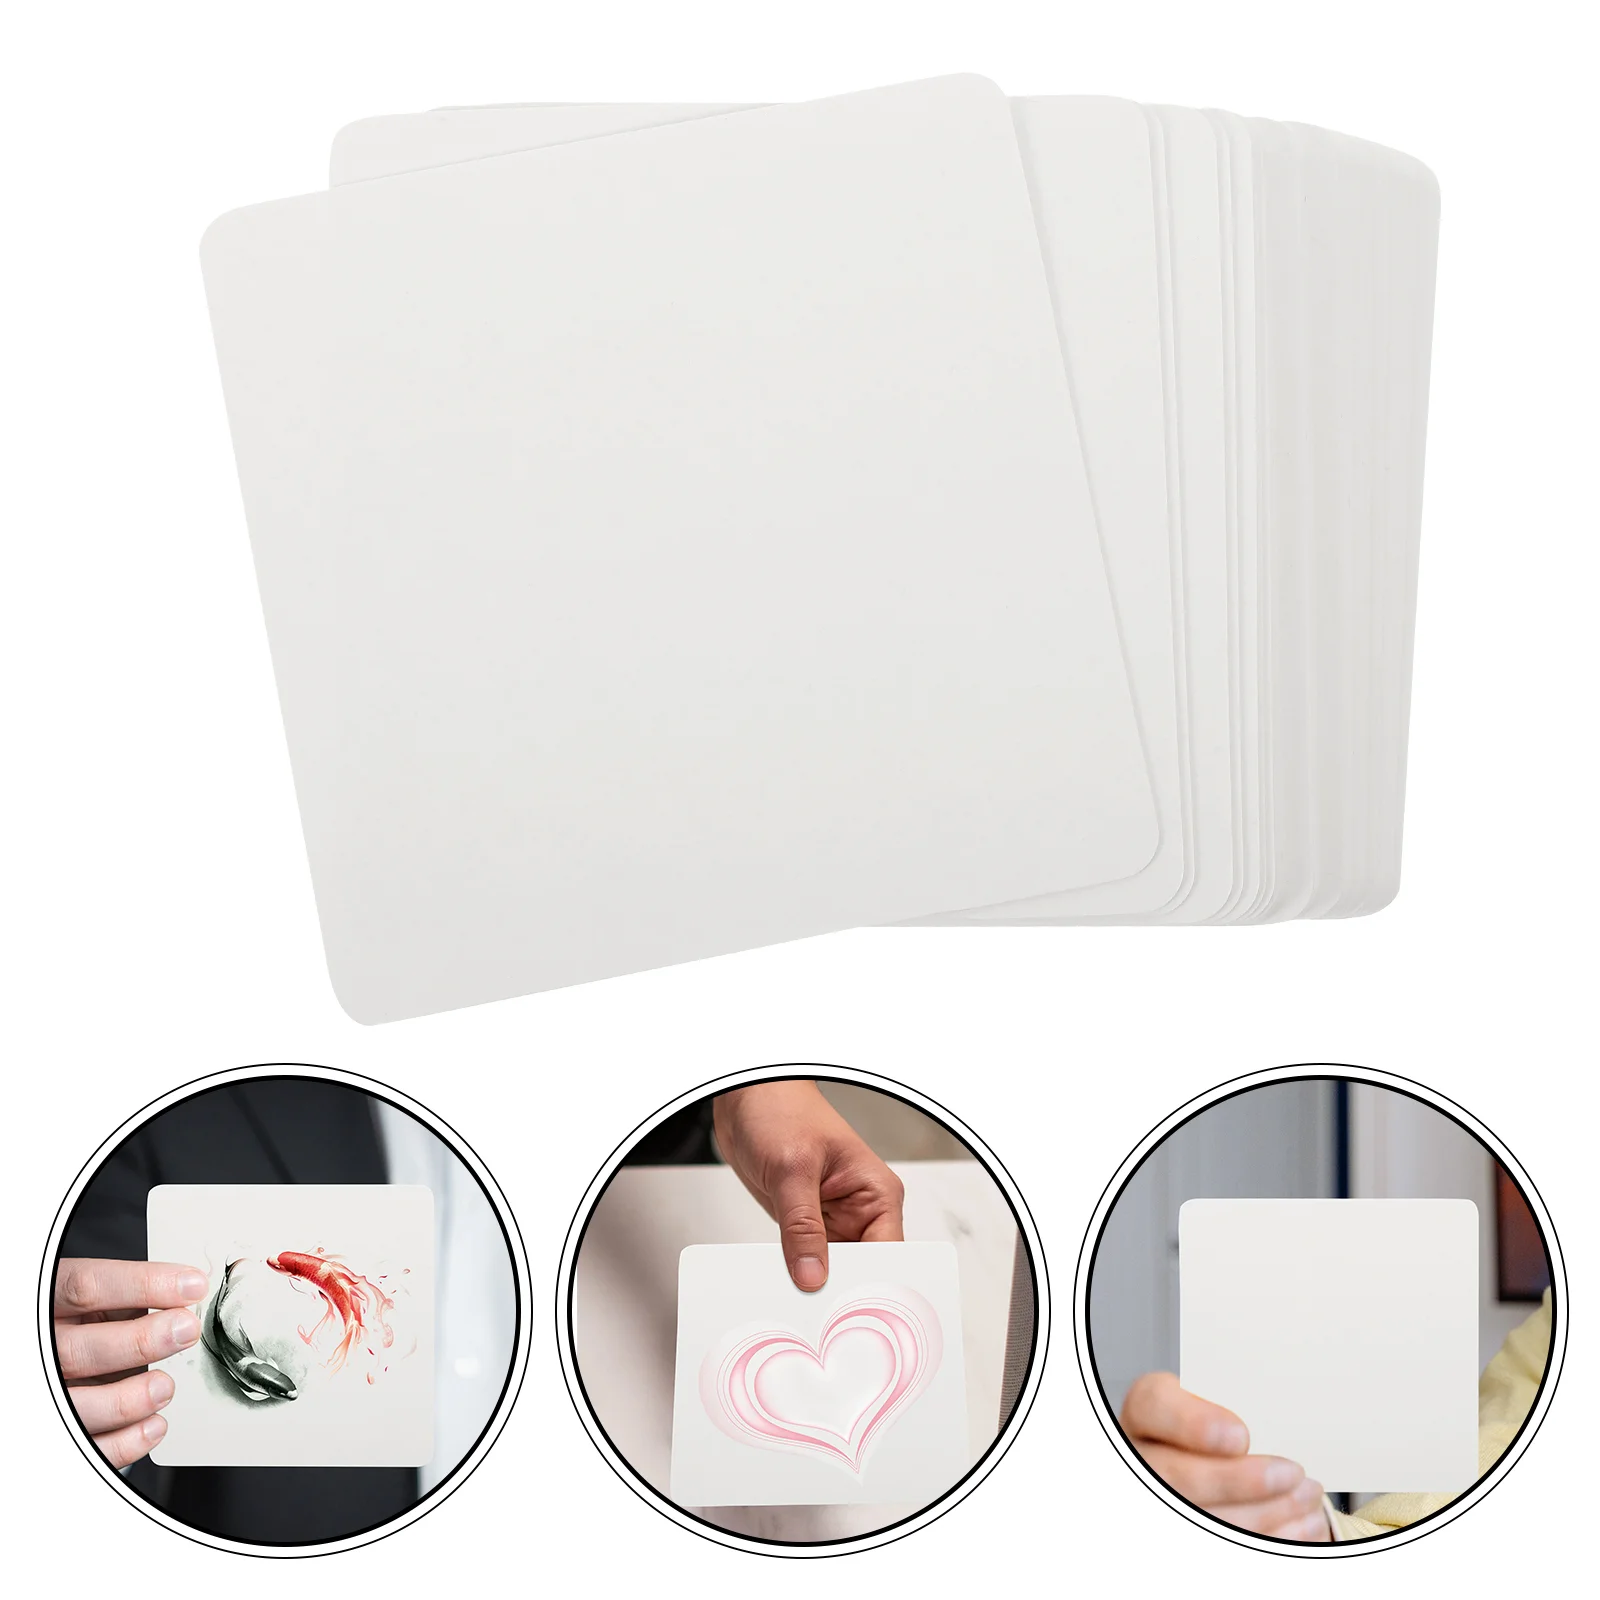 

160Pcs Blank Cards Dry Erase Cards Blank Writing Cards Reusable Blank DIY Cards Flash Cards